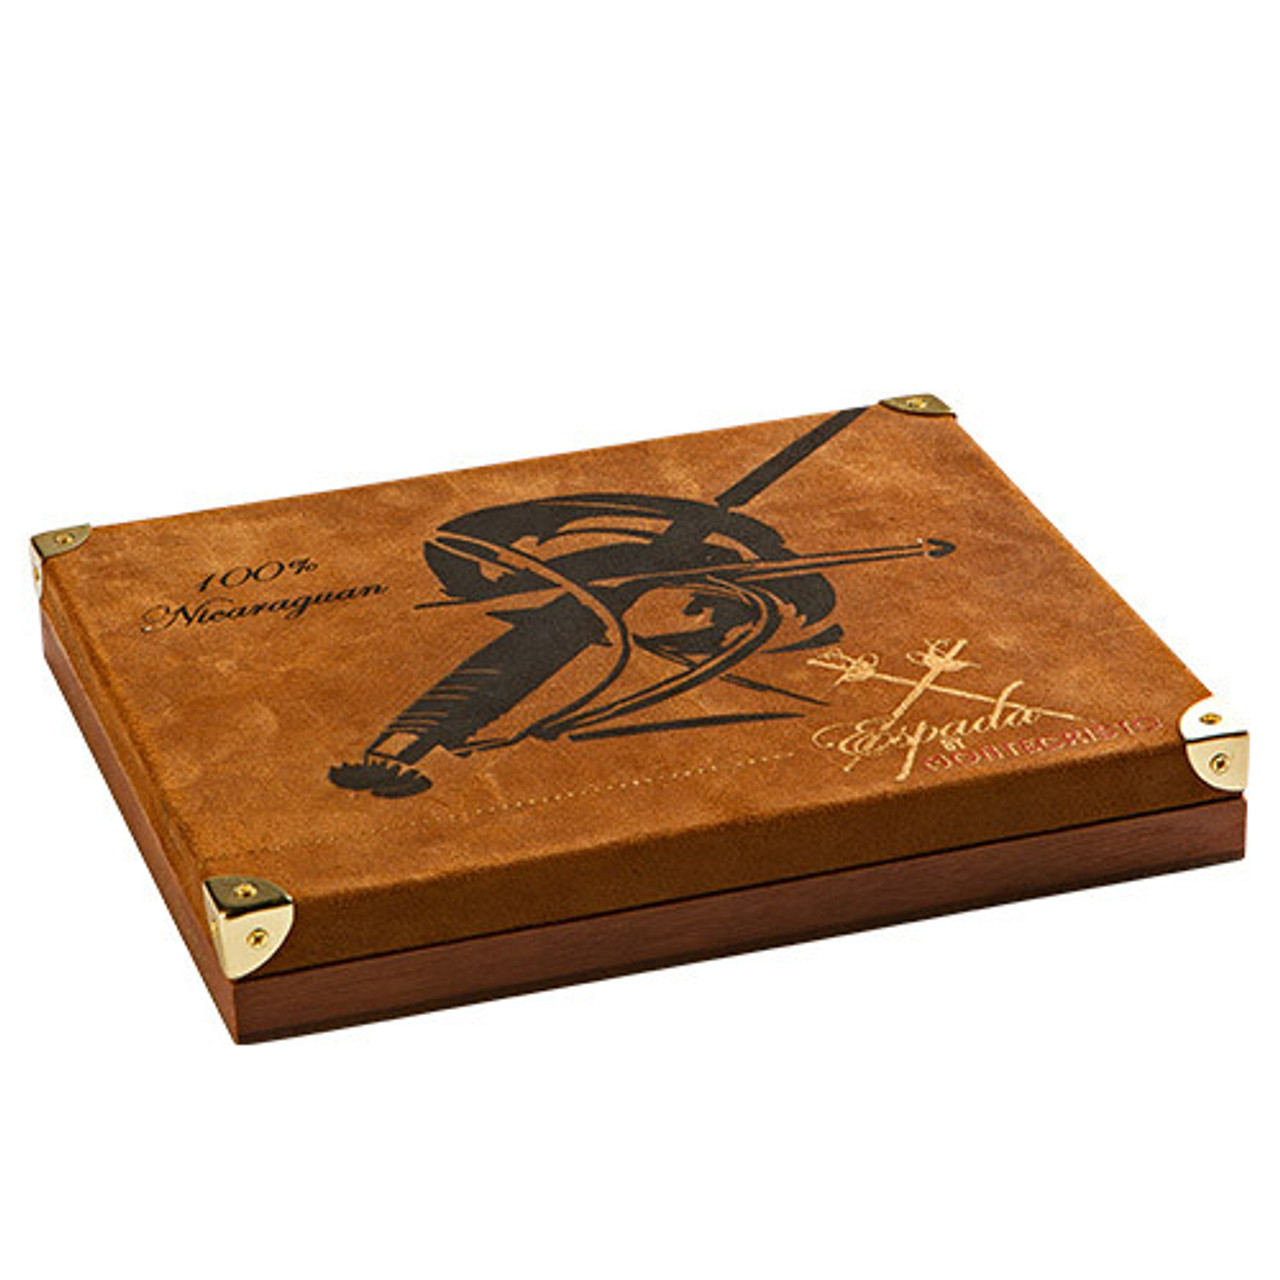 Montecristo Espada Ricasso - 5 x 54 Cigars (Box of 10) *Box